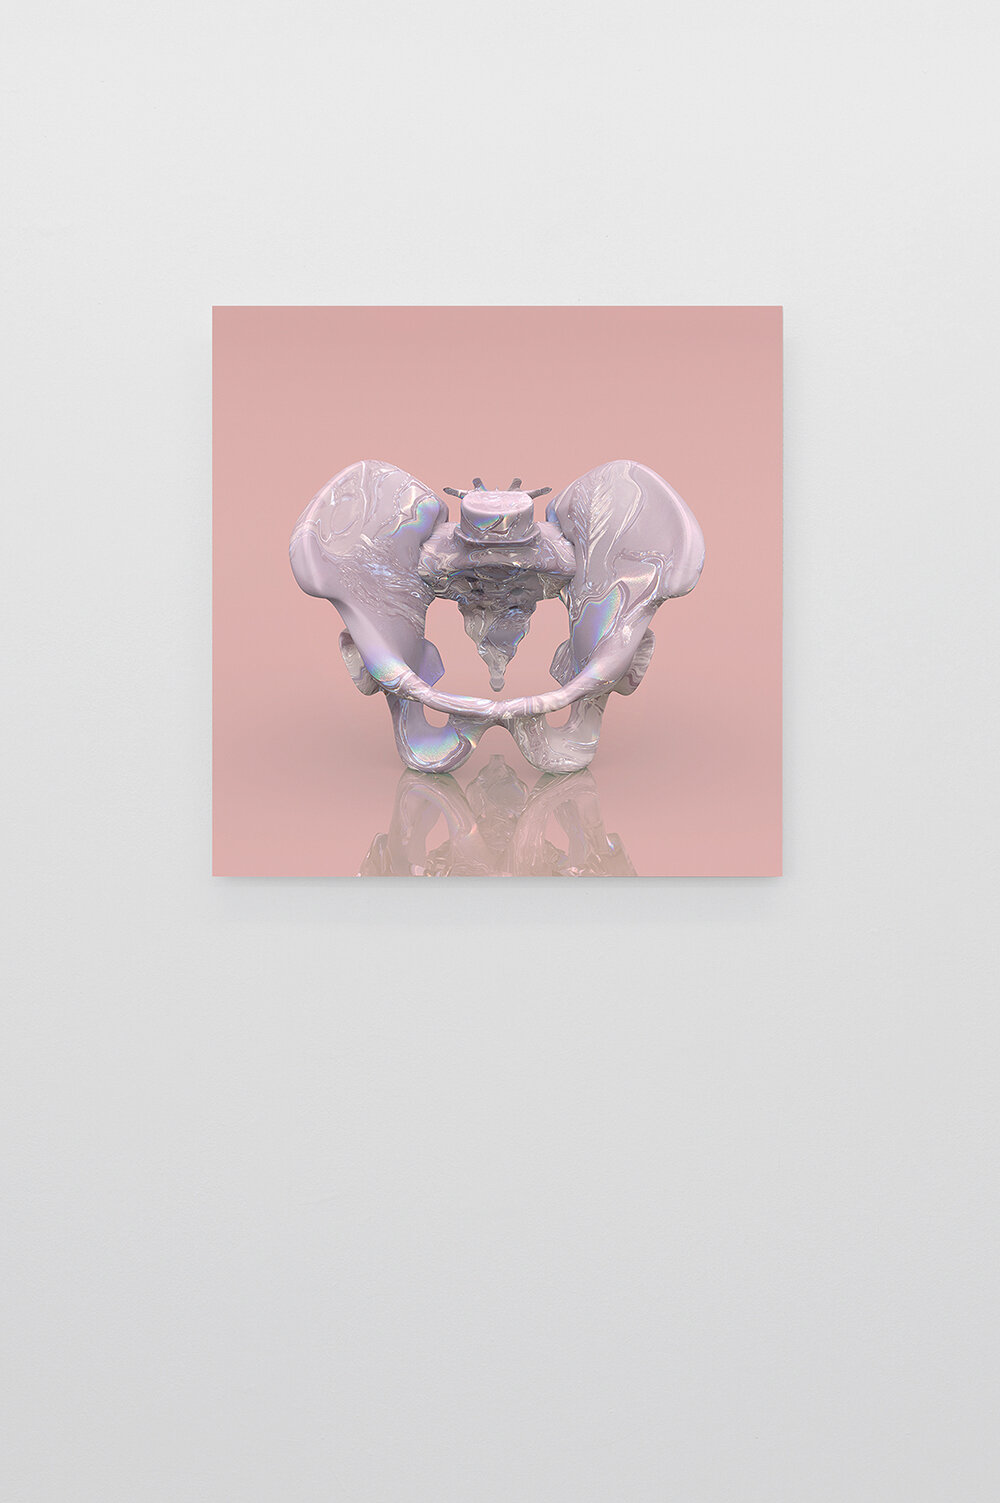   Pelvis   2016, digital sculpture, inkjet printed on paper, mounted on plexiglass, 75 × 75 cm 